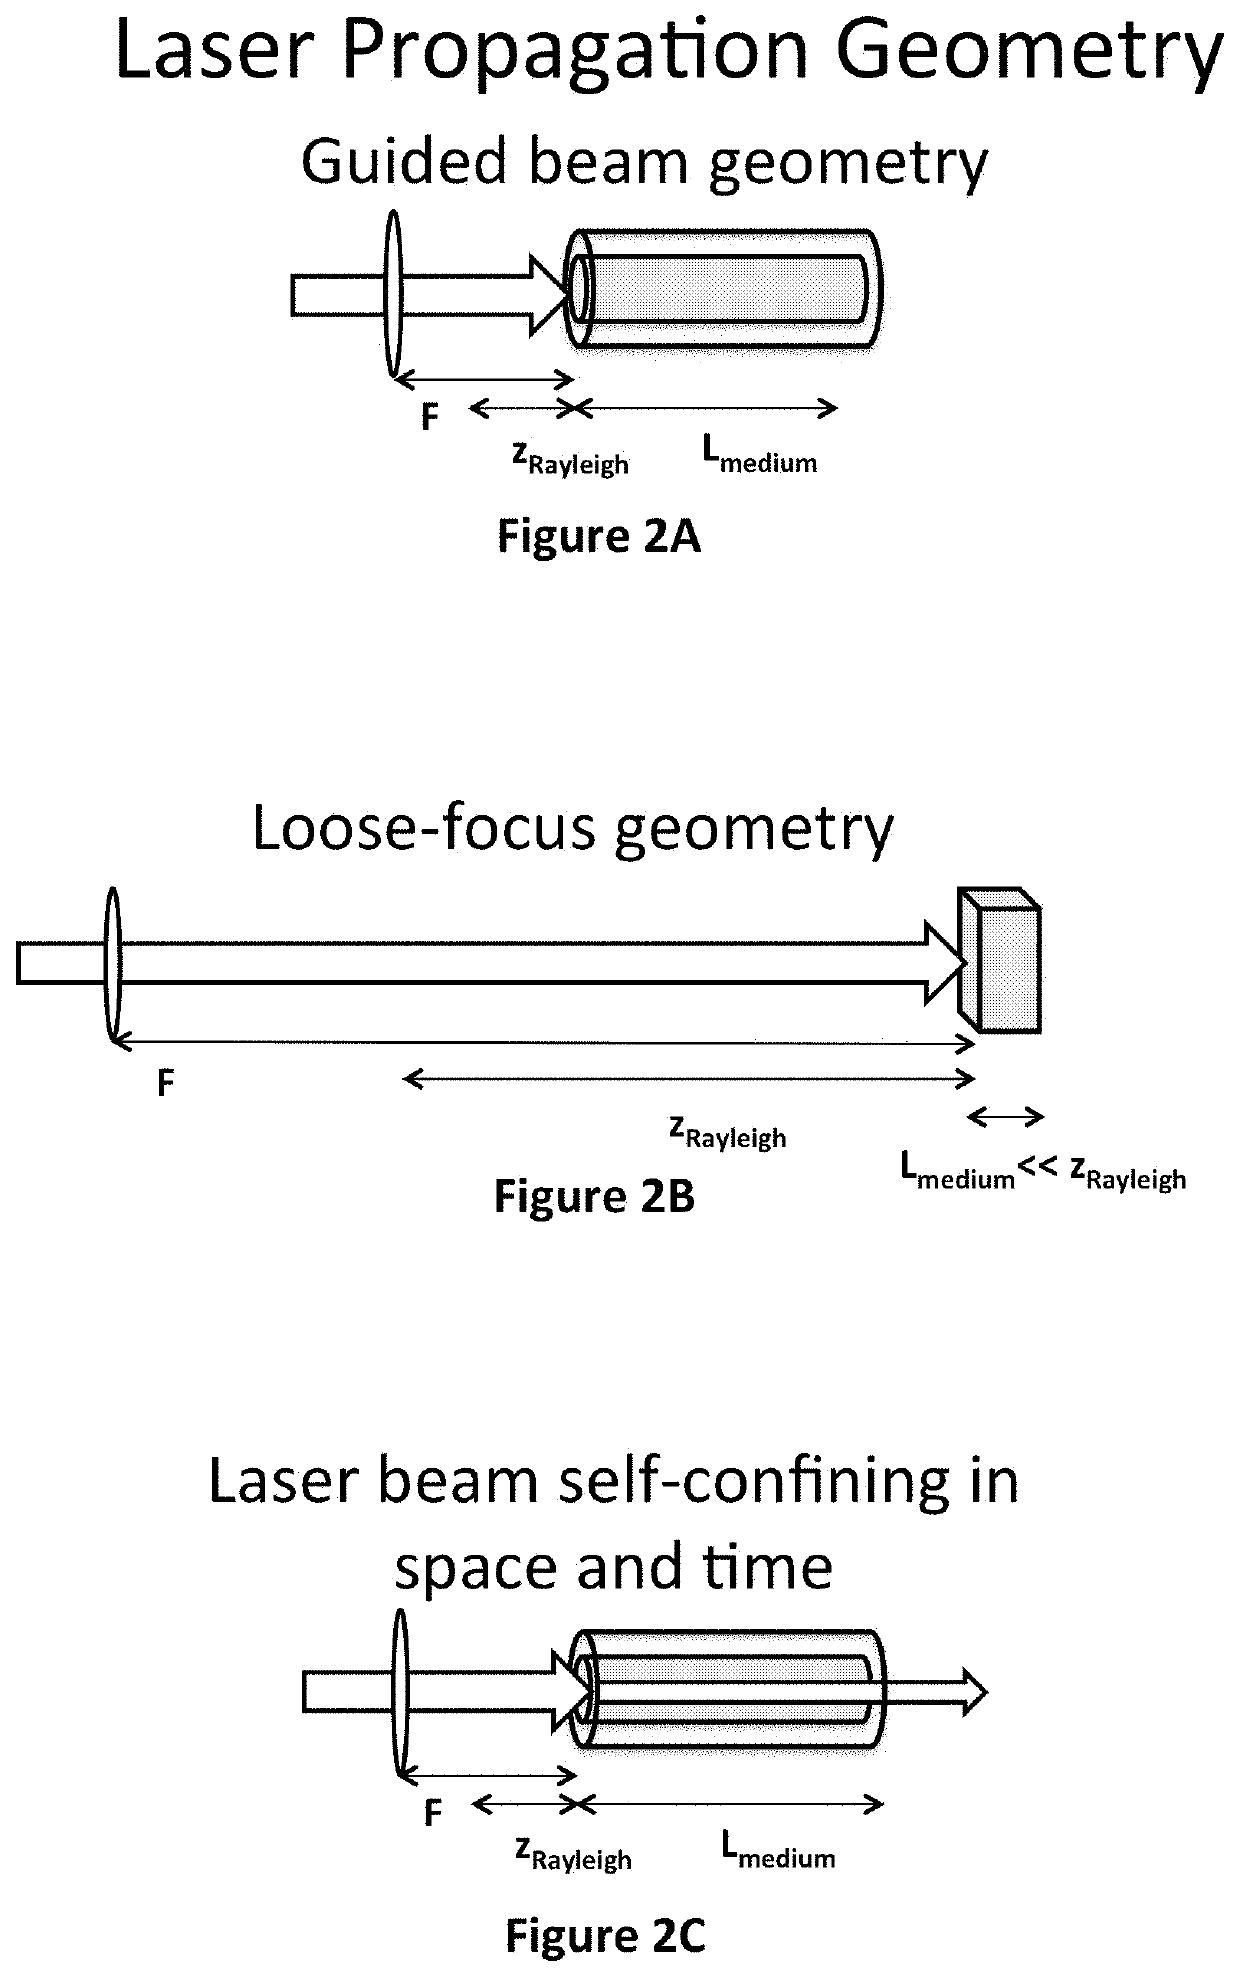 Generation of VUV, EUV, and X-ray Light Using VUV-UV-VIS Lasers